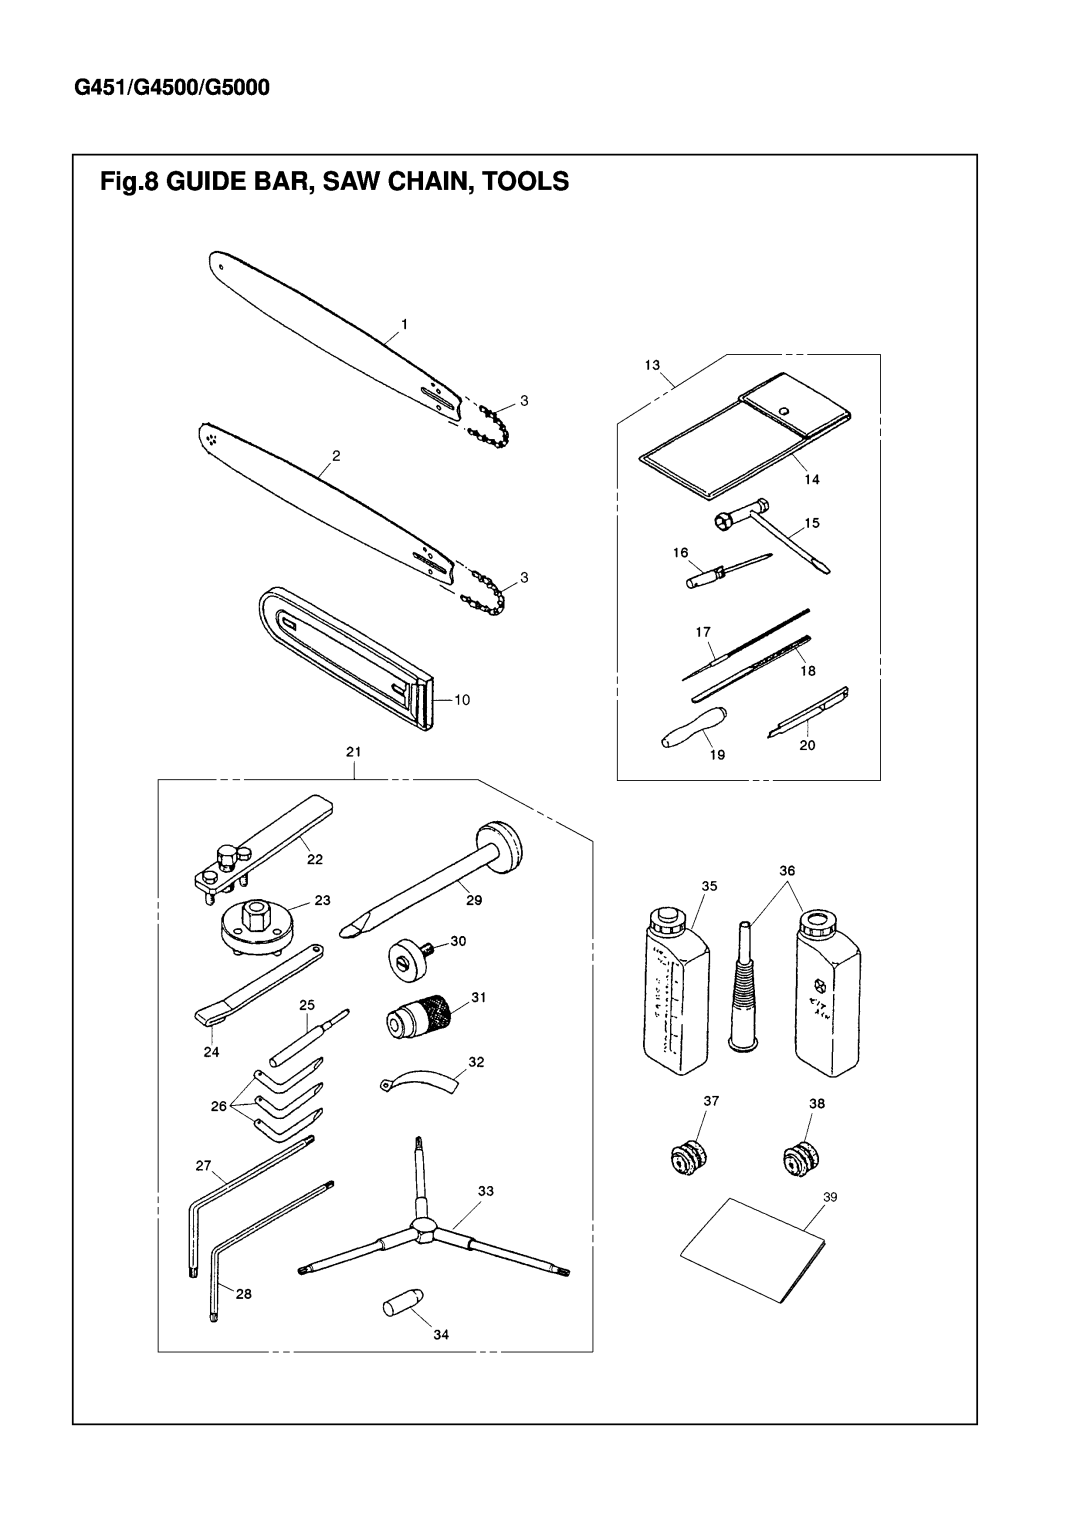 Zenoah manual Guide Bar, Saw Chain, Tools, G451/G4500/G5000 